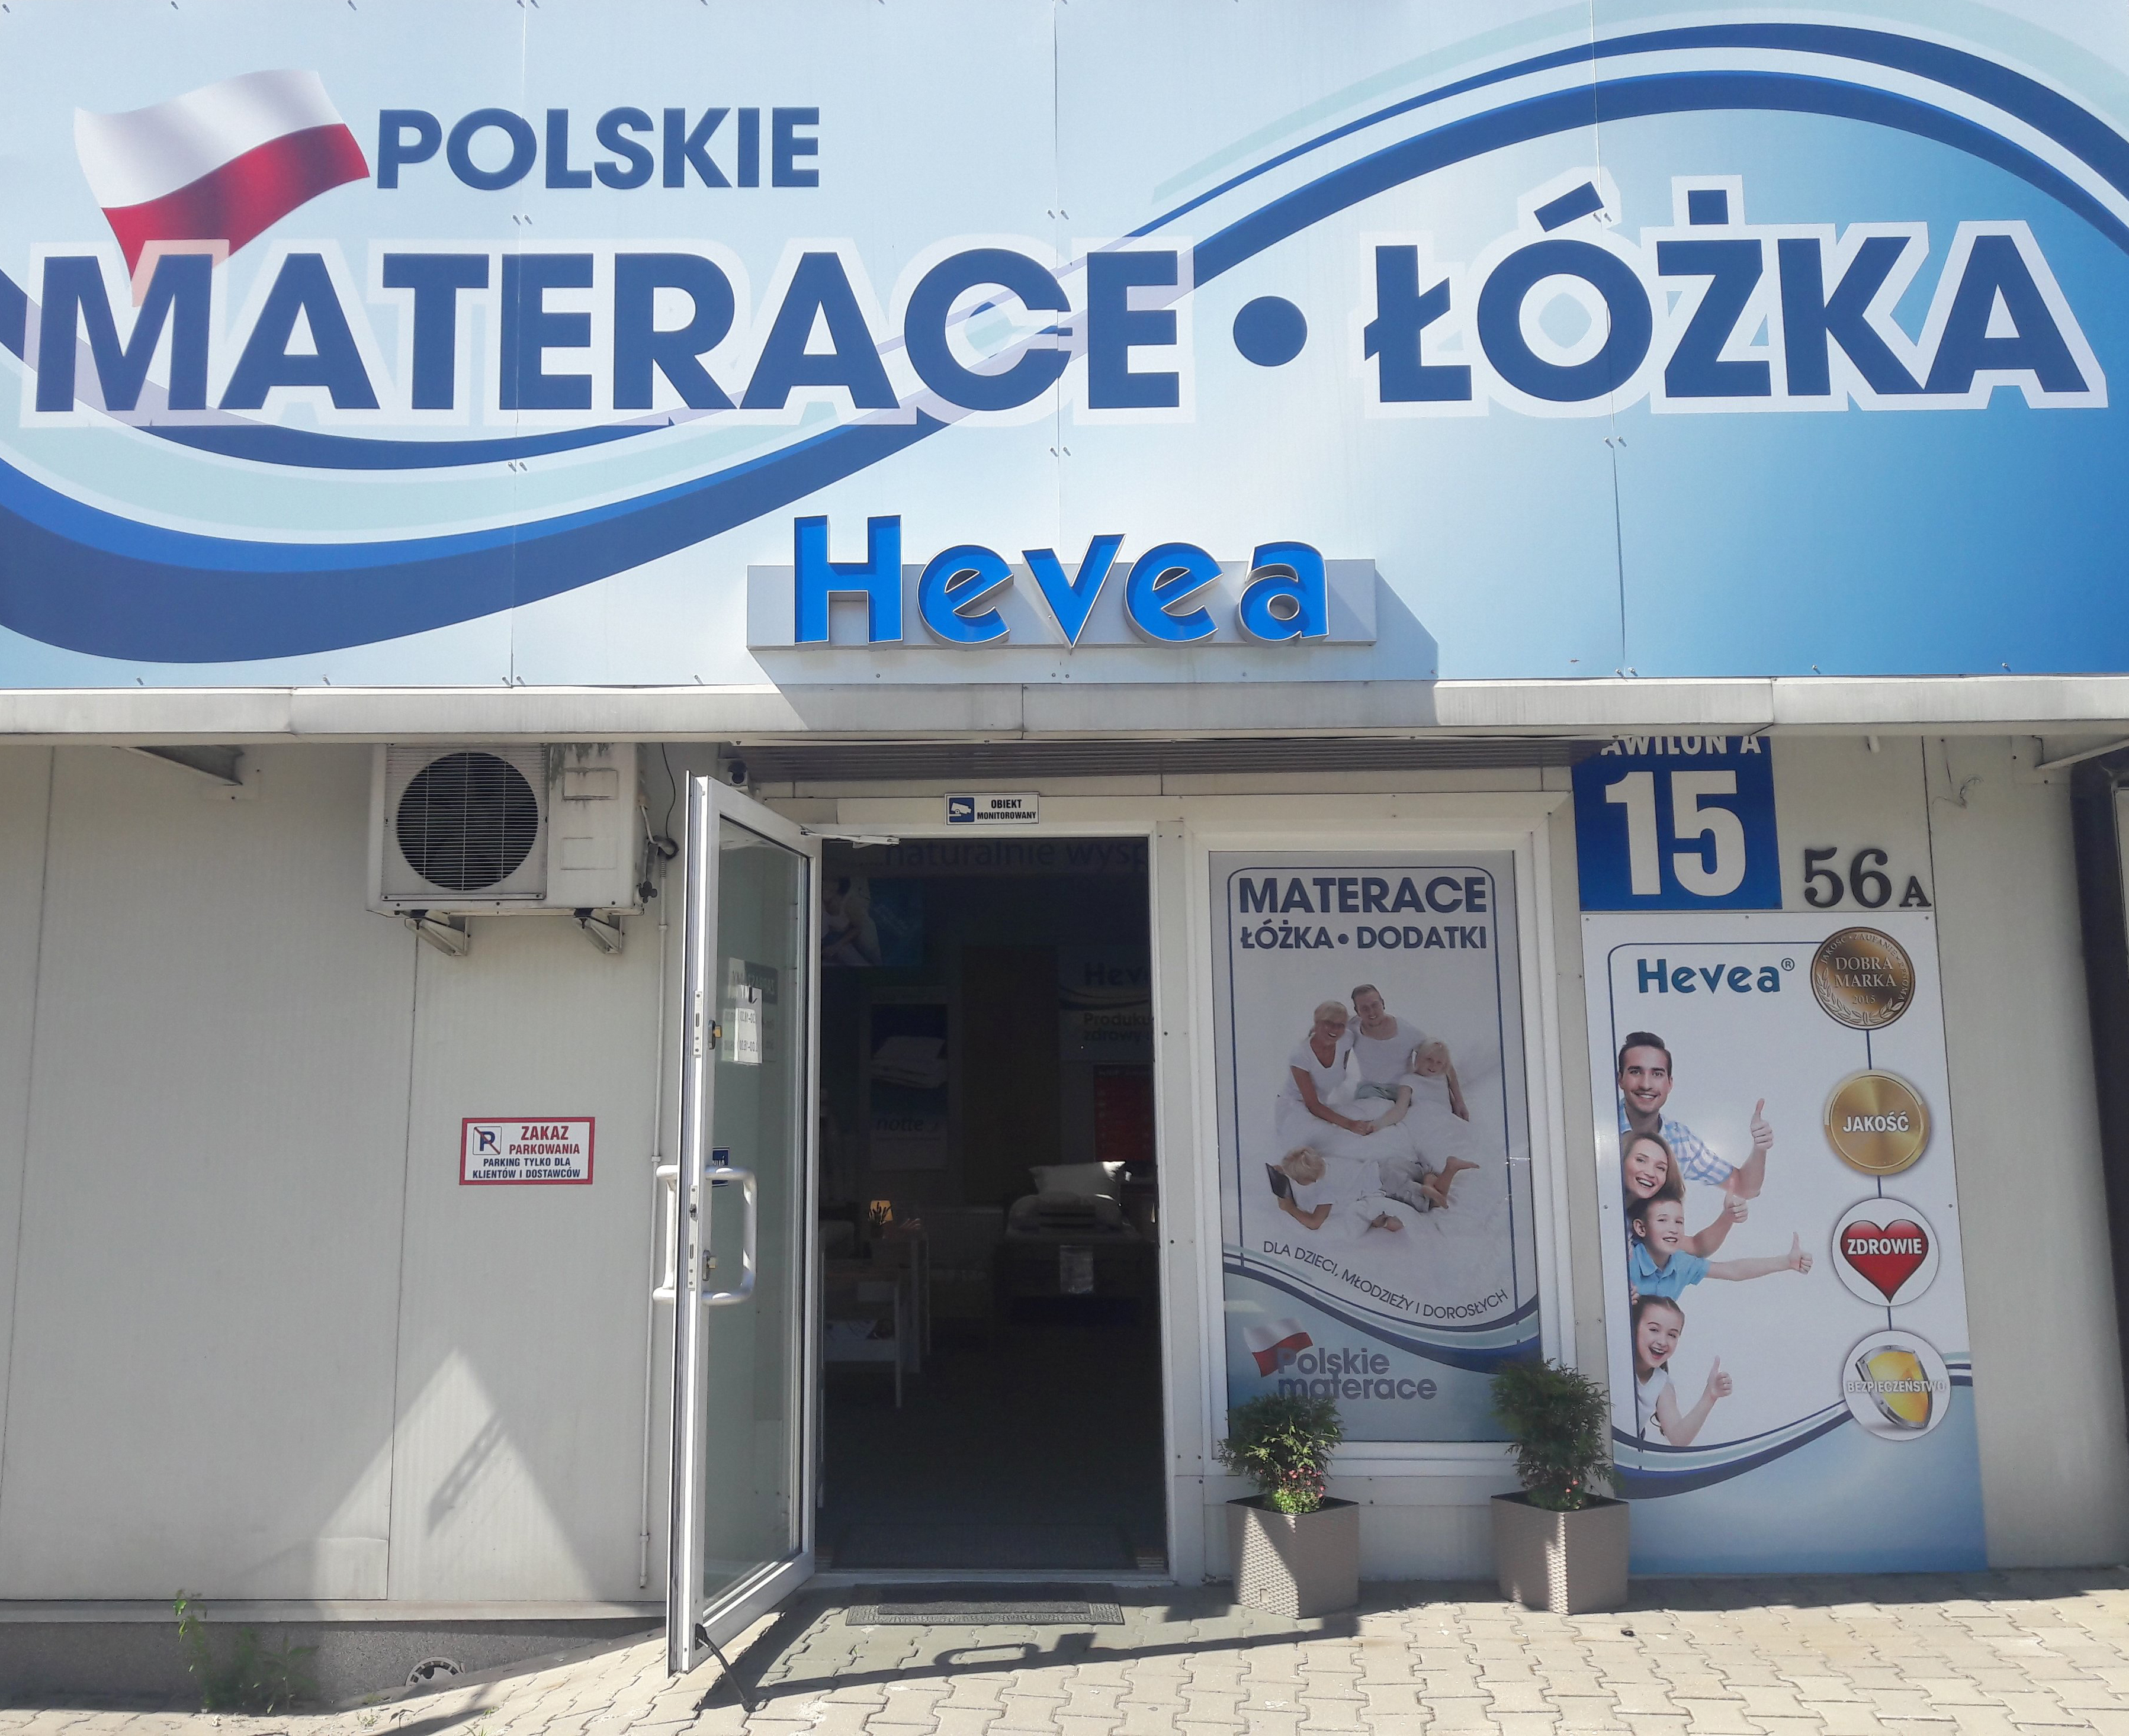 Polskie Materace Hevea Salon Krakow